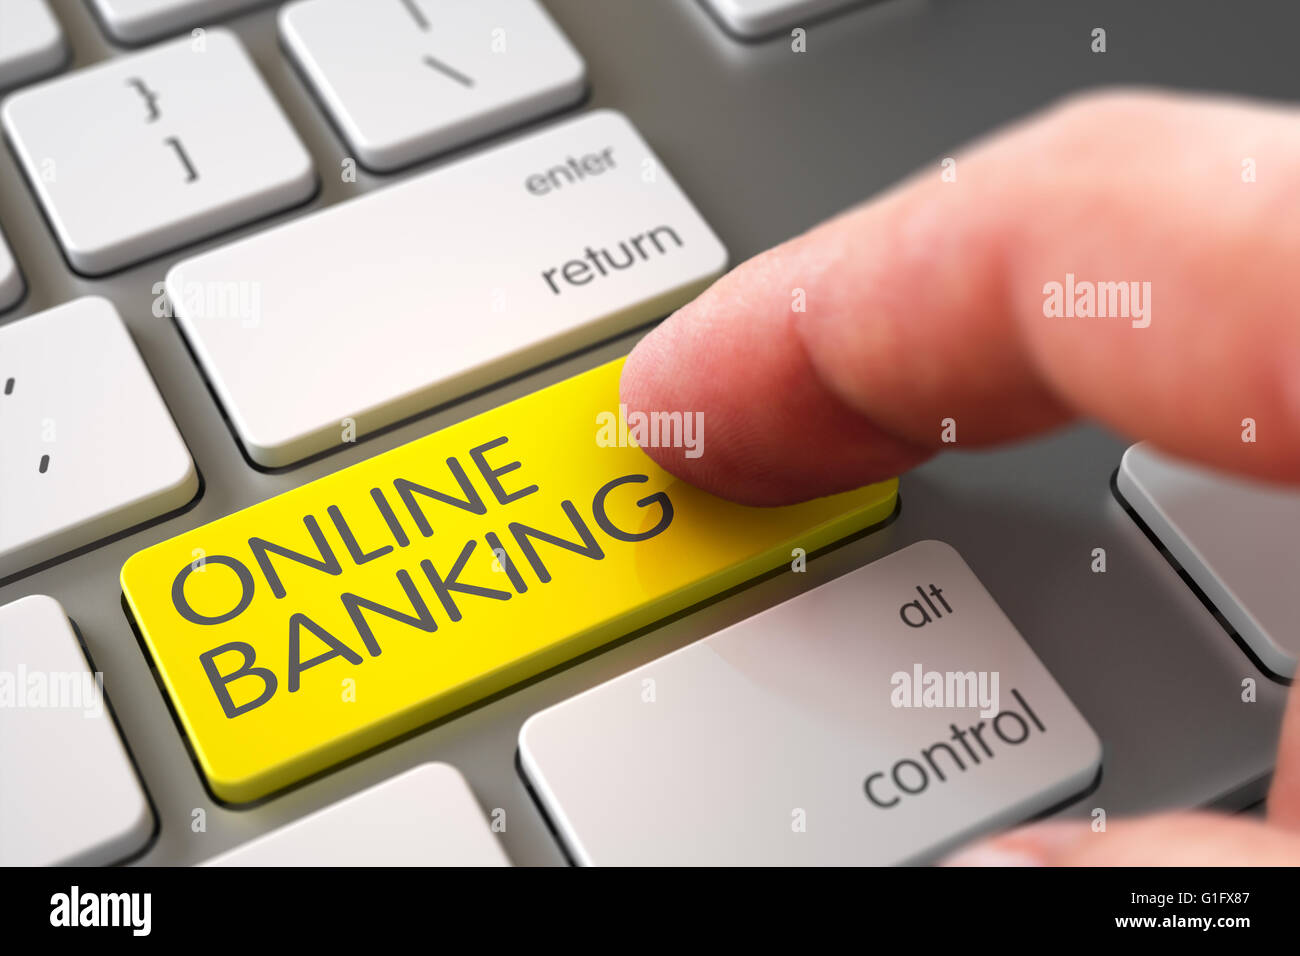 Online Banking - Aluminum Keyboard Concept. Stock Photo